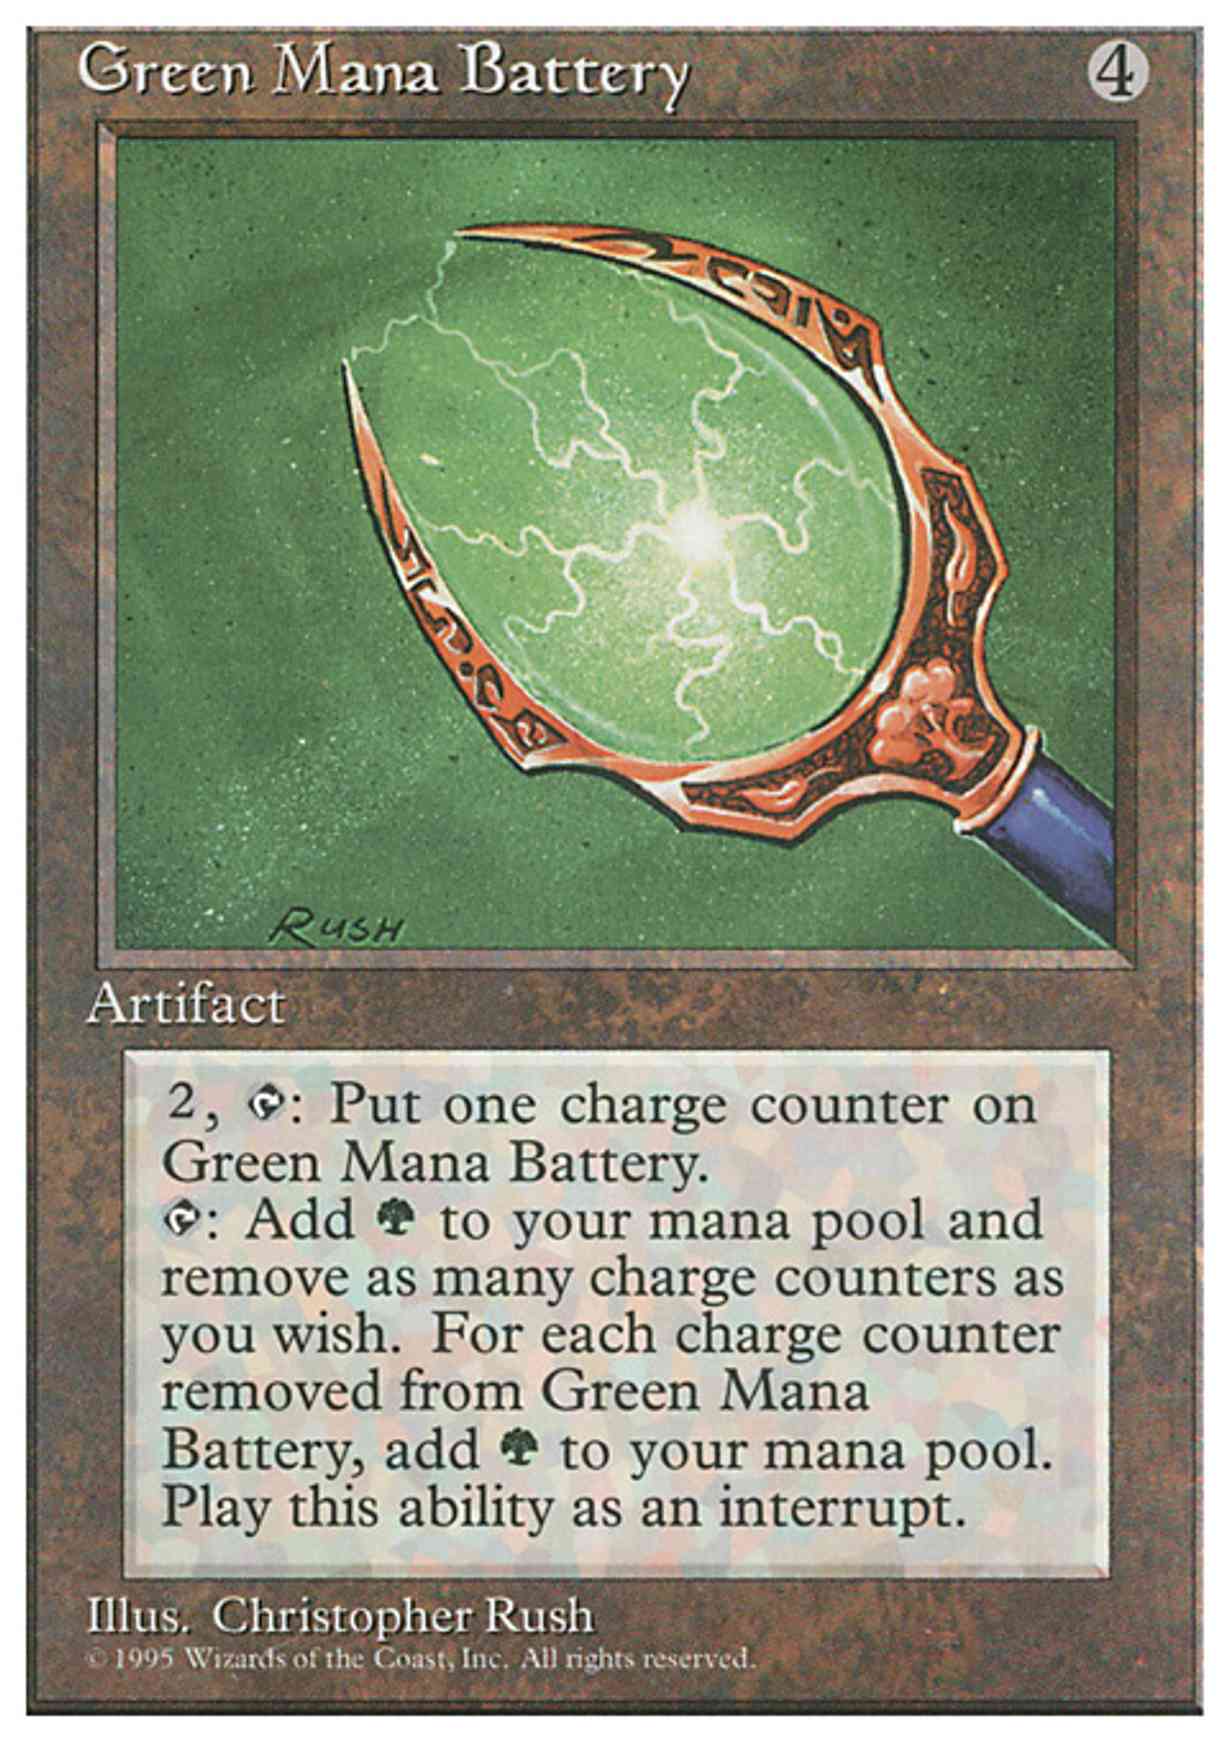 Green Mana Battery magic card front